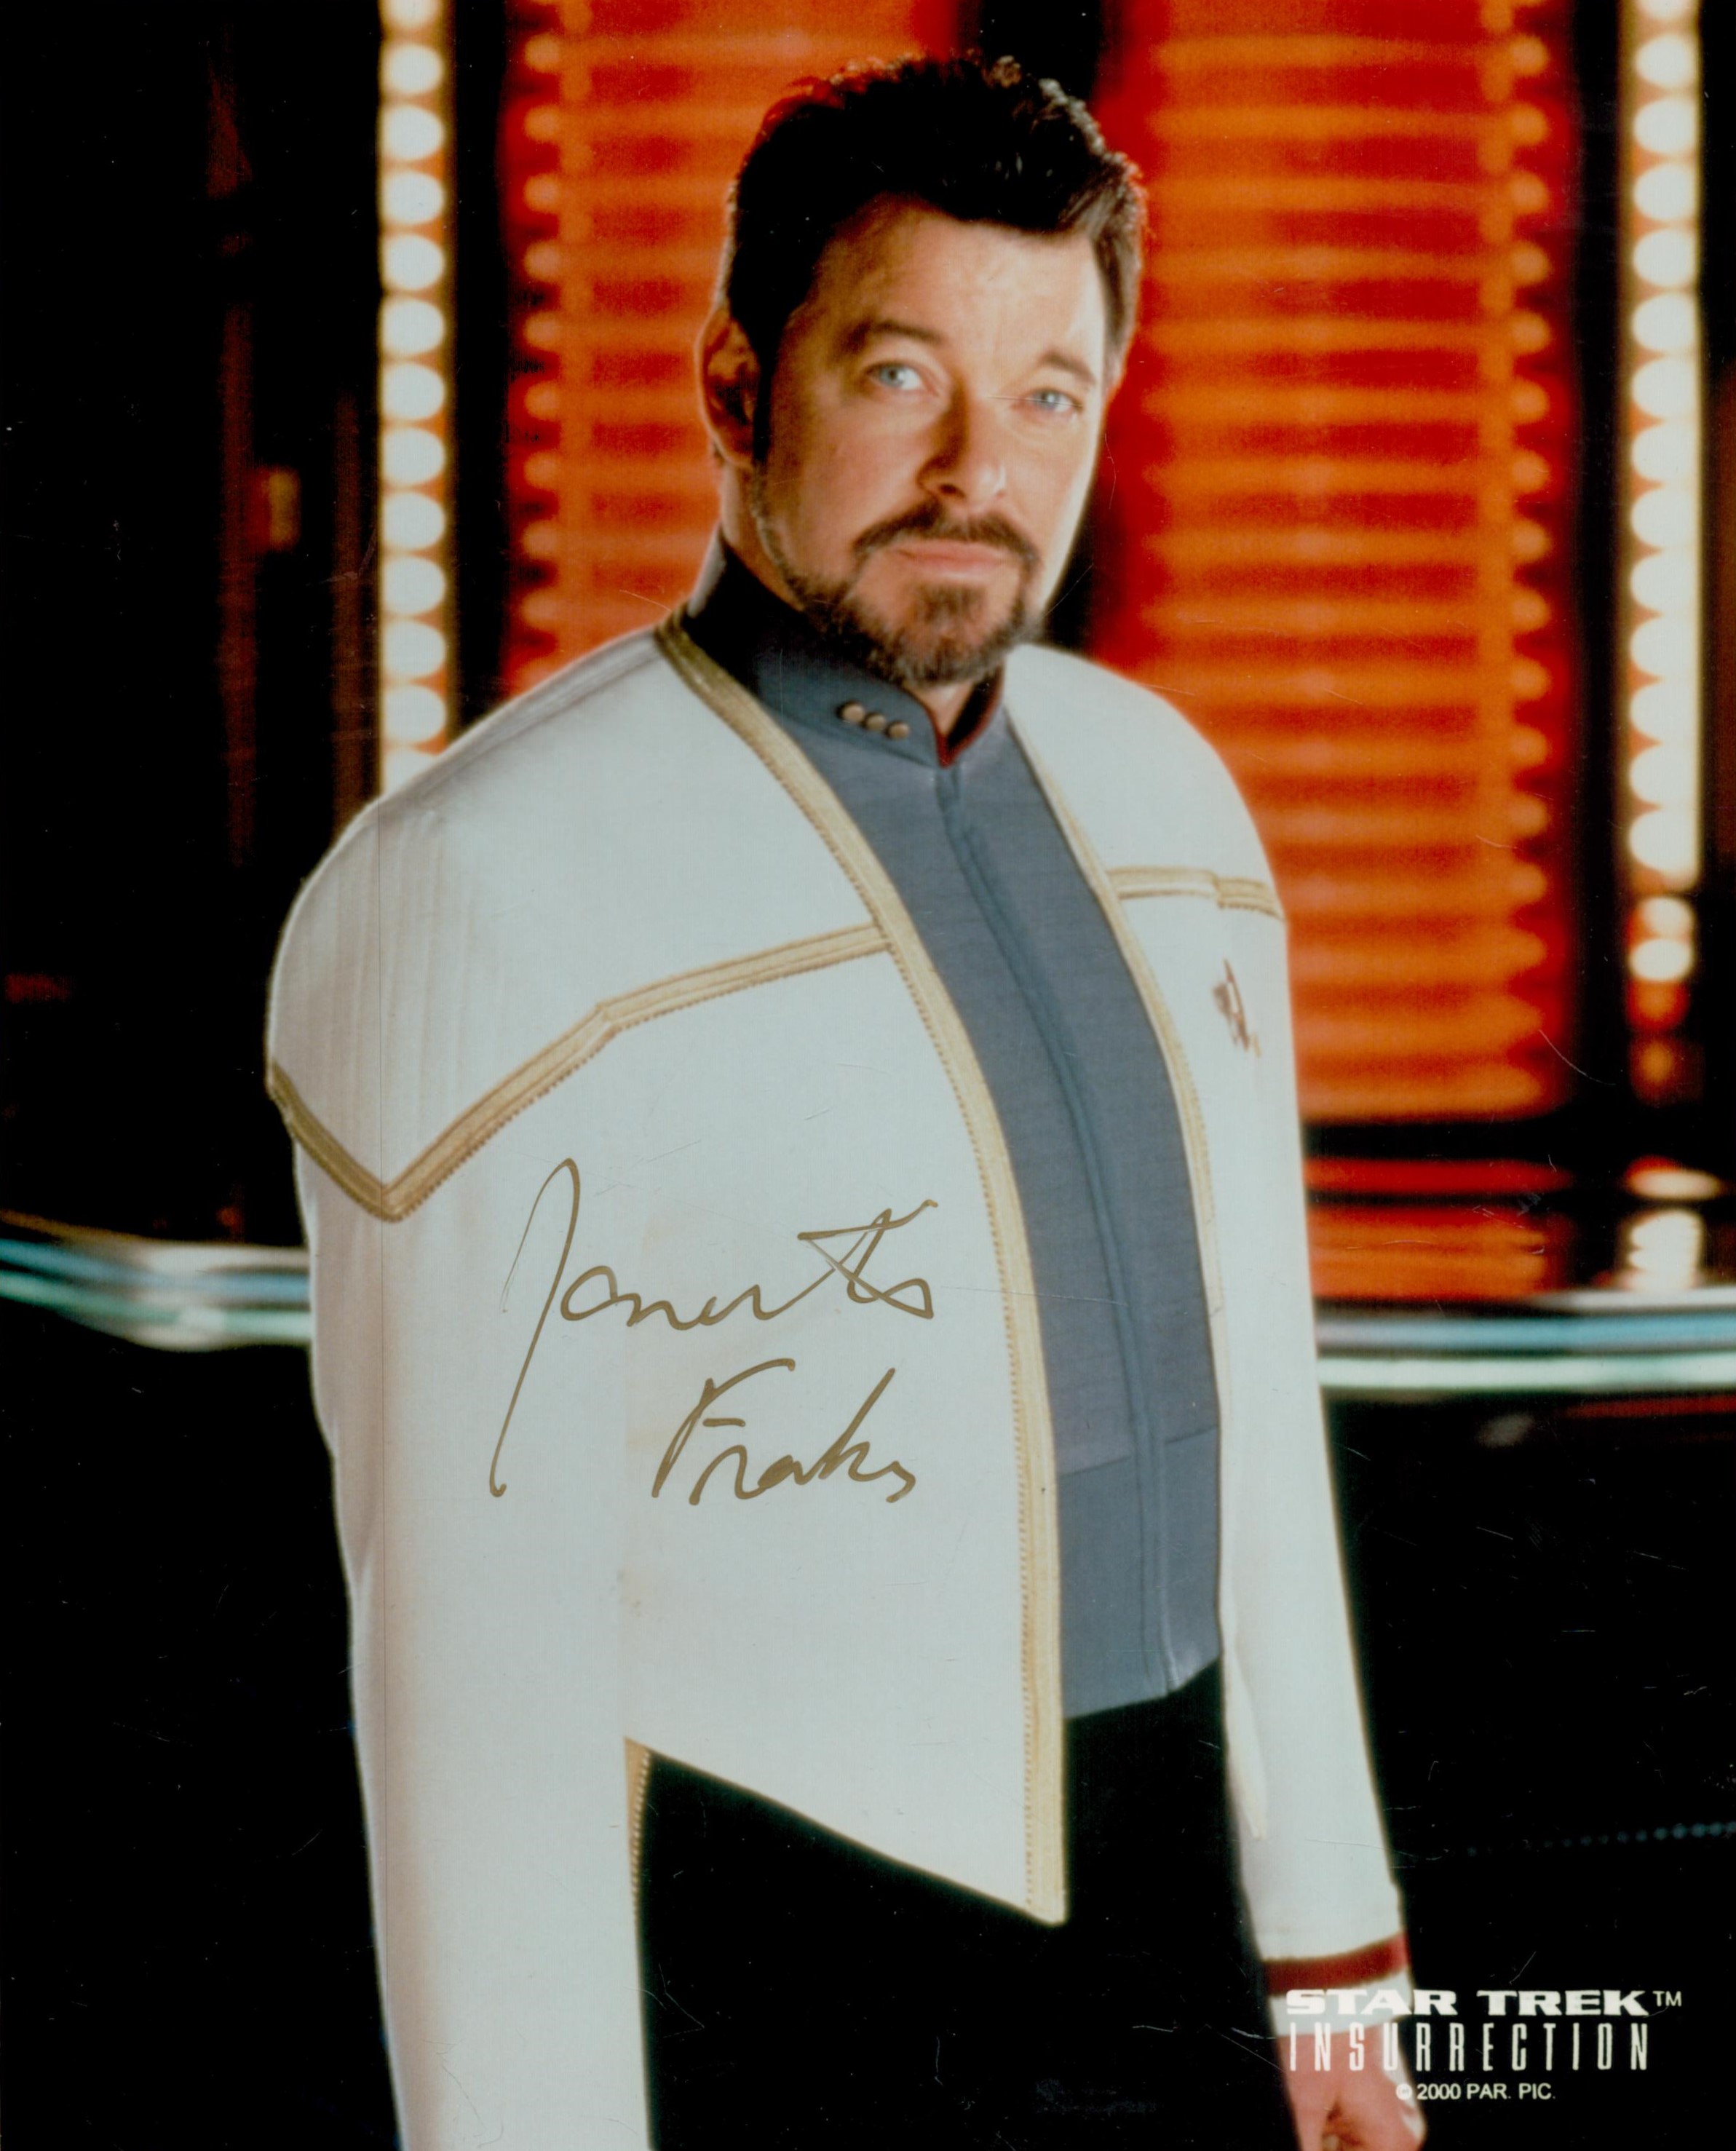 Star Trek Johnathan Frakes Signed 10x8 inch Colour Star Trek Photo. Signed in gold ink. Good